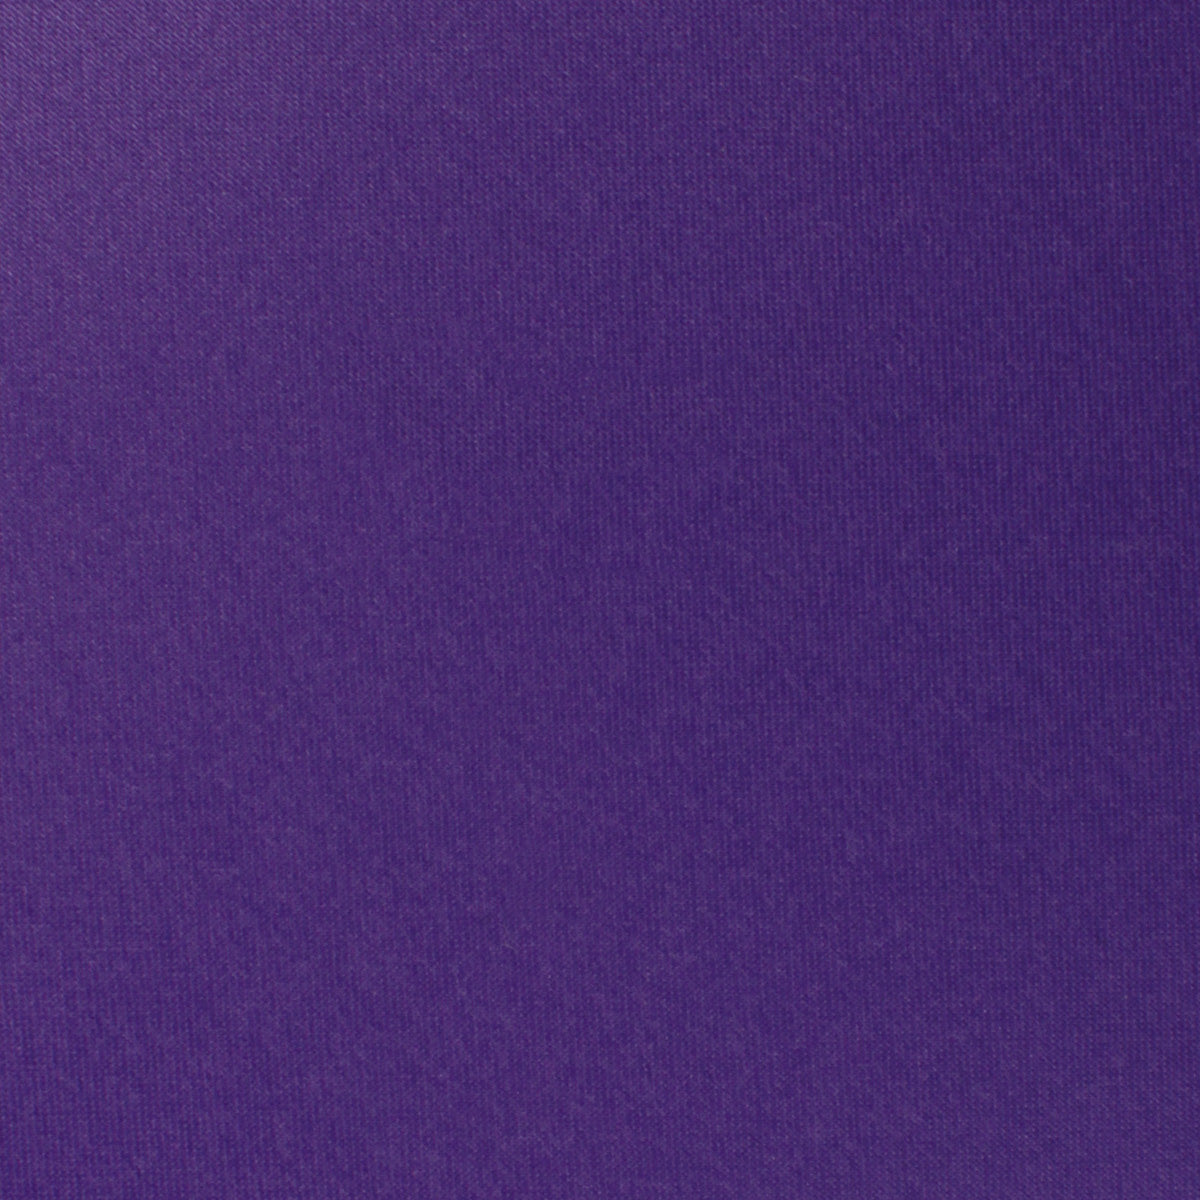 Royal Violet Purple Satin Self Bow Tie Fabric